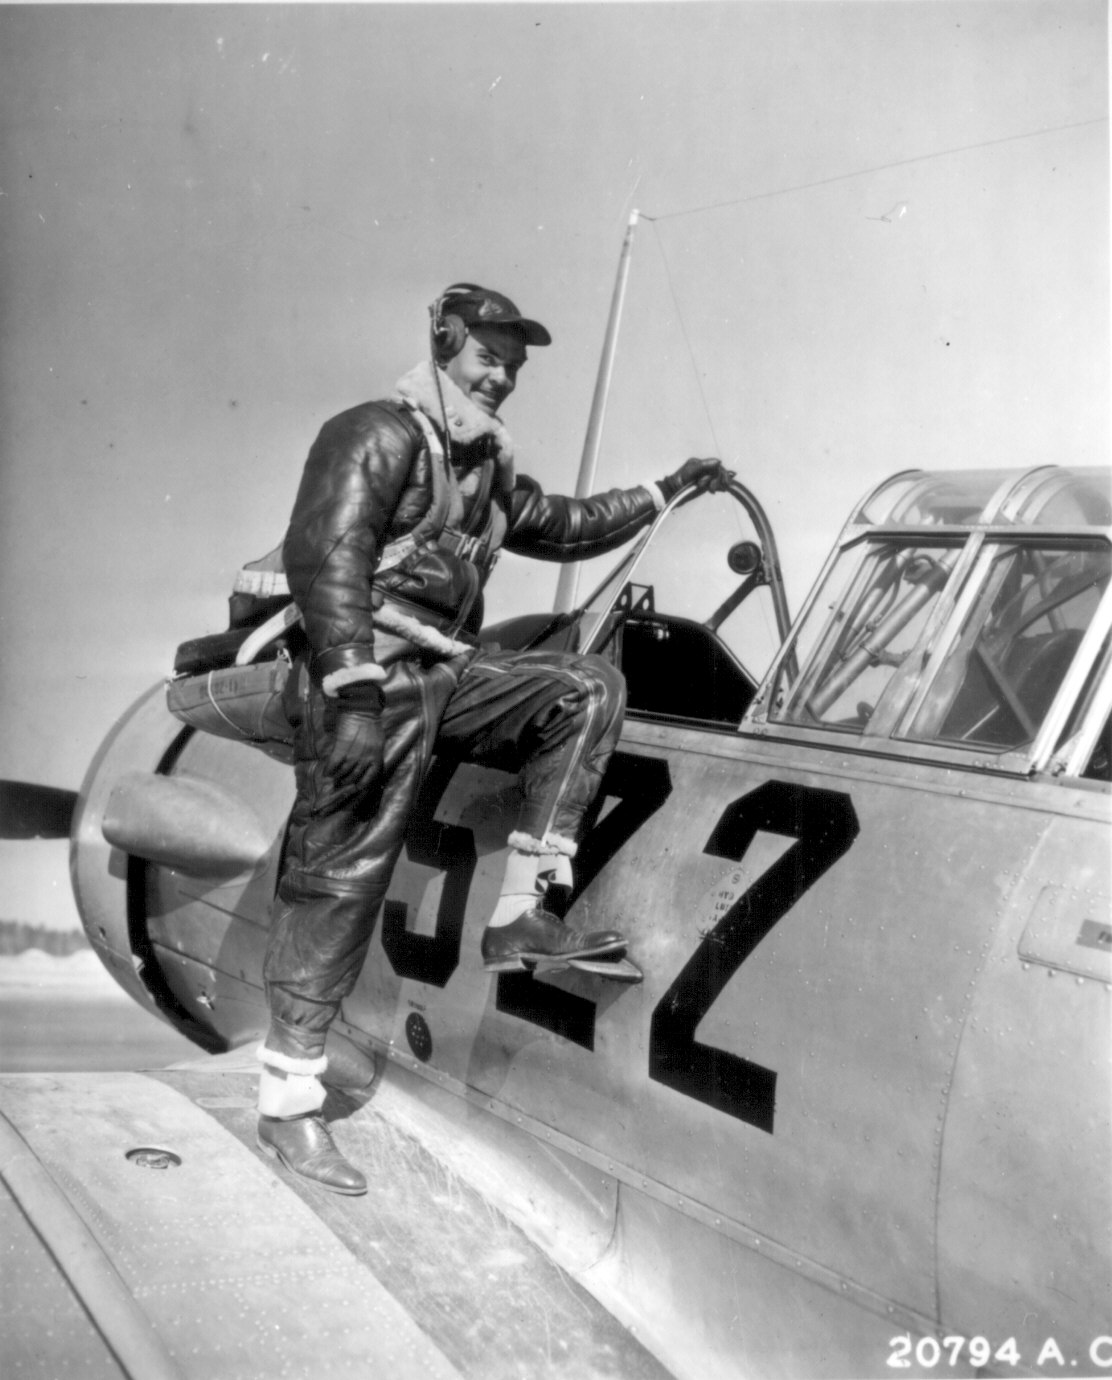 US Army Air Force pilot Captain Benjamin Oliver Davis, Jr. climbing into a Vultee AT-6 Texan aircraft, Tuskegee, Alabama, United States, Jan 1942